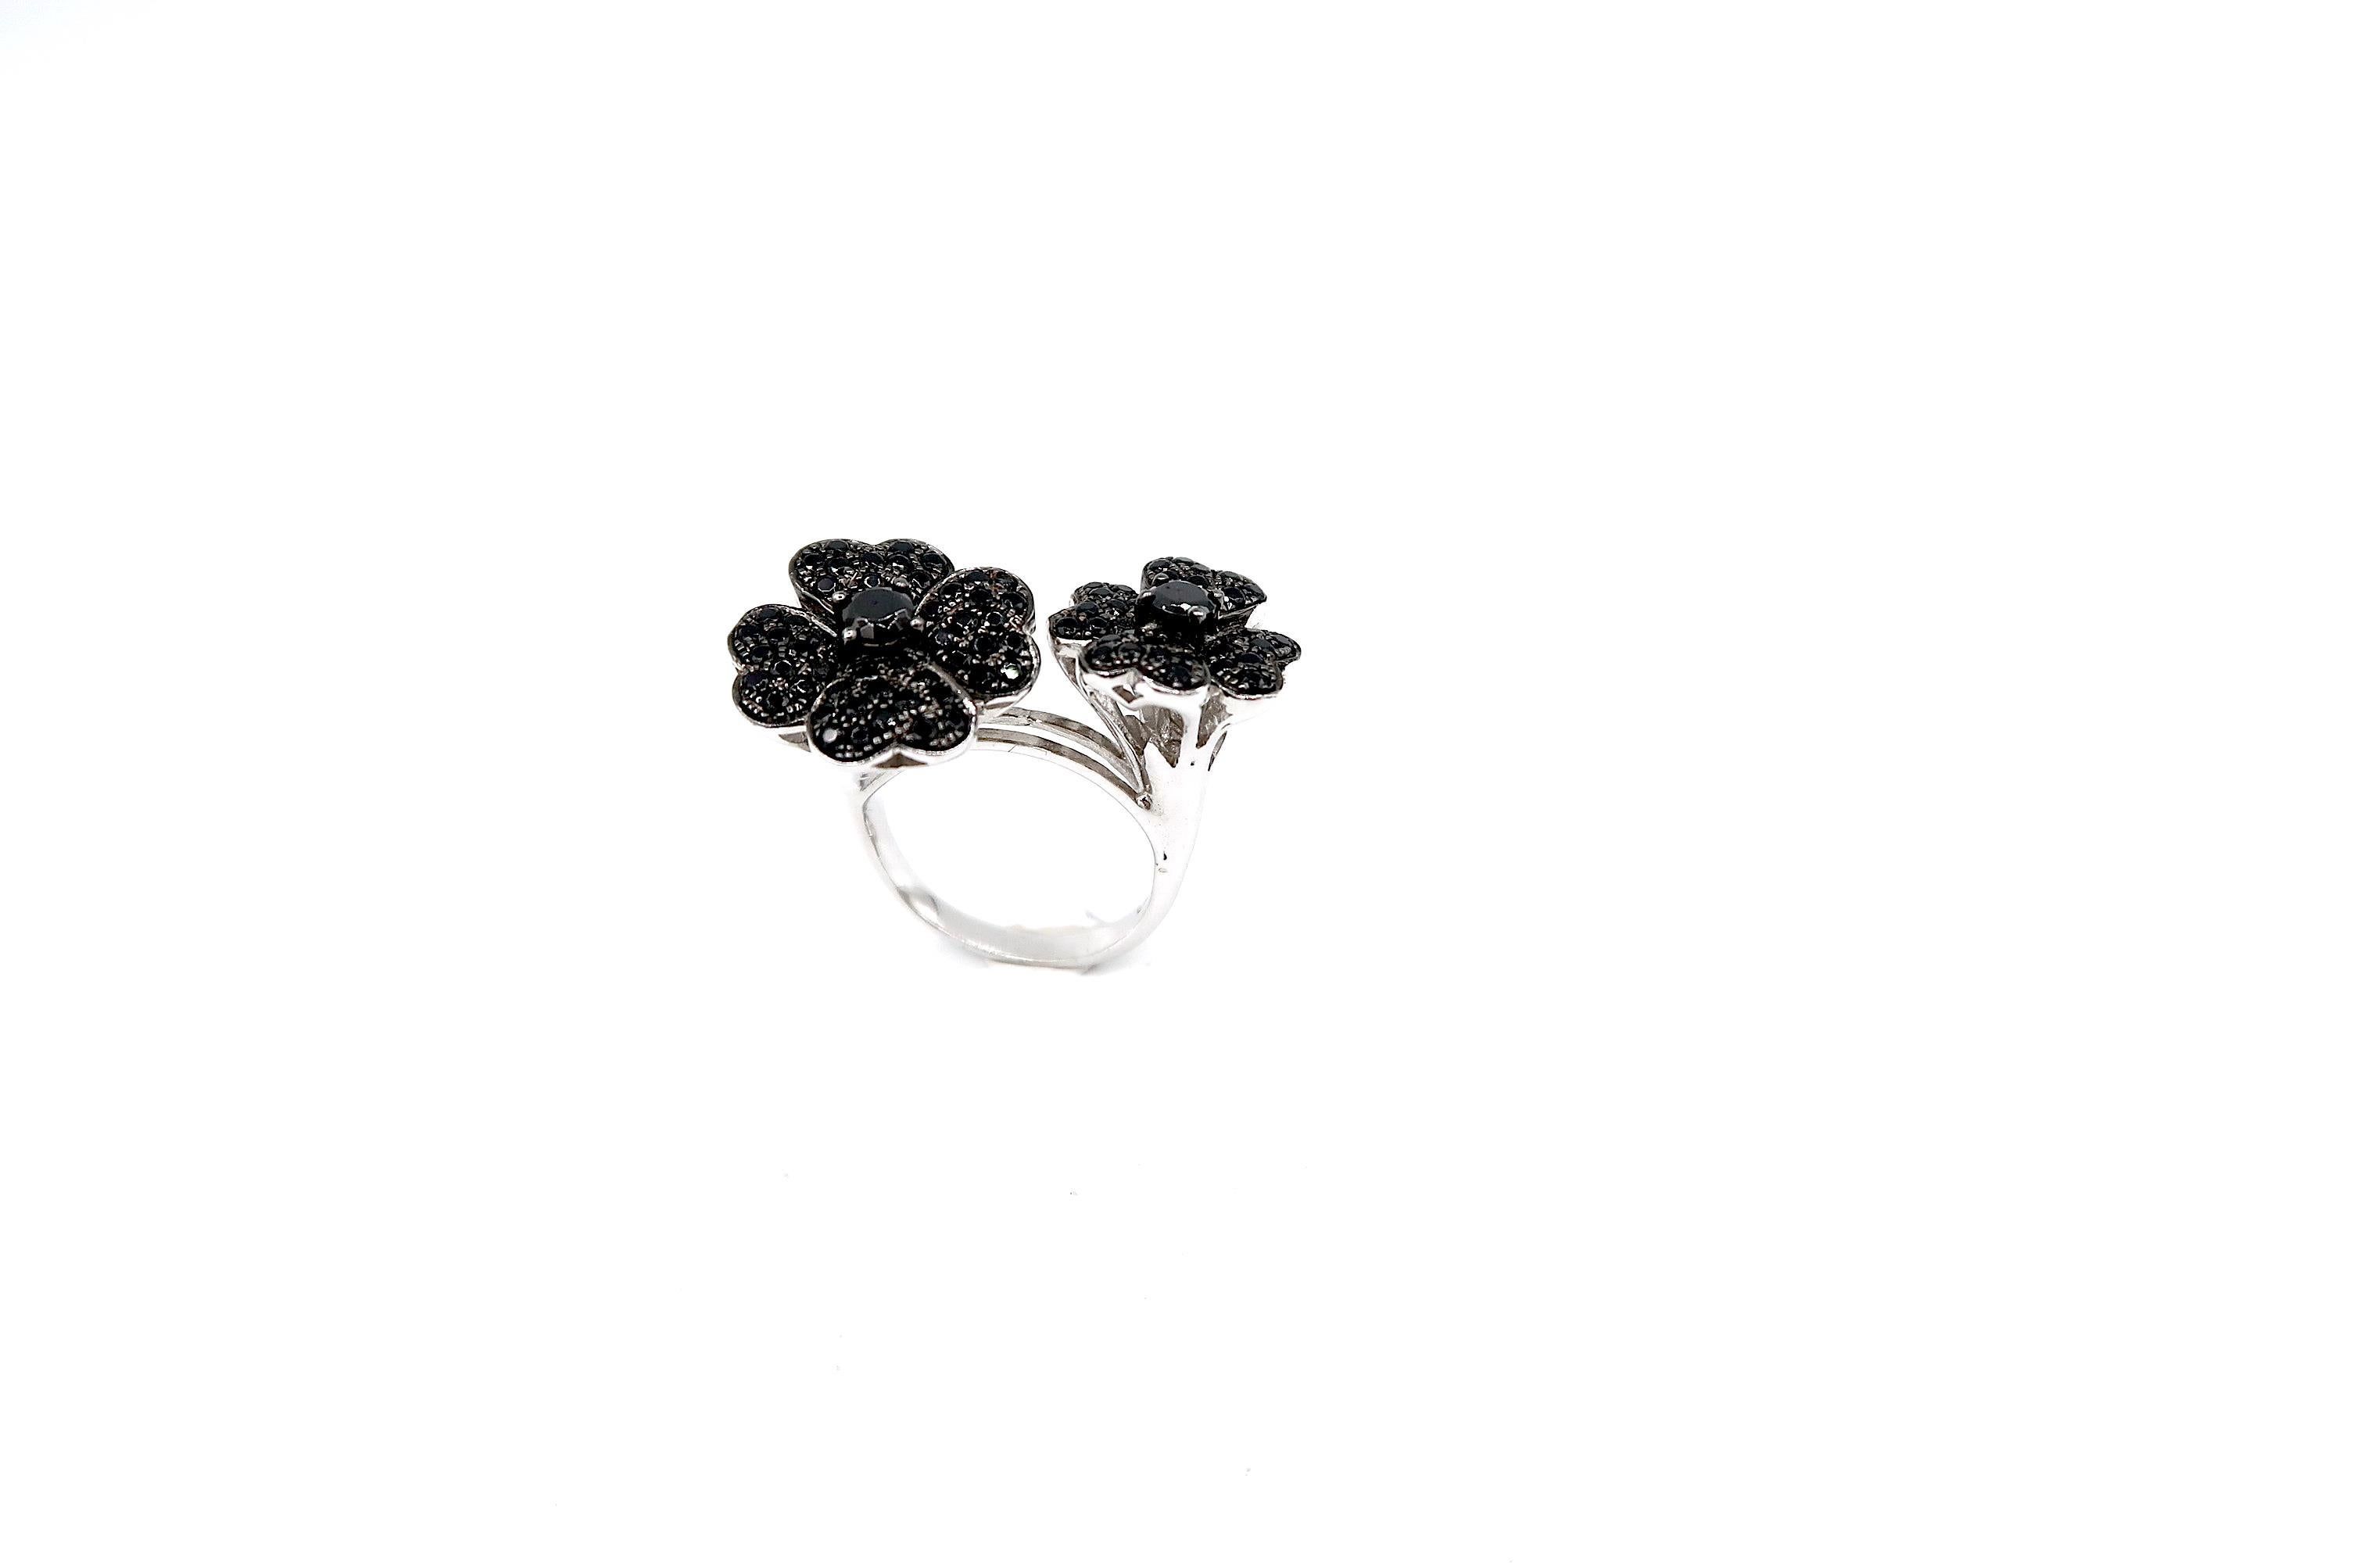 4-Petal Black Diamond Flowers Ring in 18K Gold

Ring size: 49, UK J, US 5

Gold: 18K 11.011g.
Black Diamond: 1.58ct.